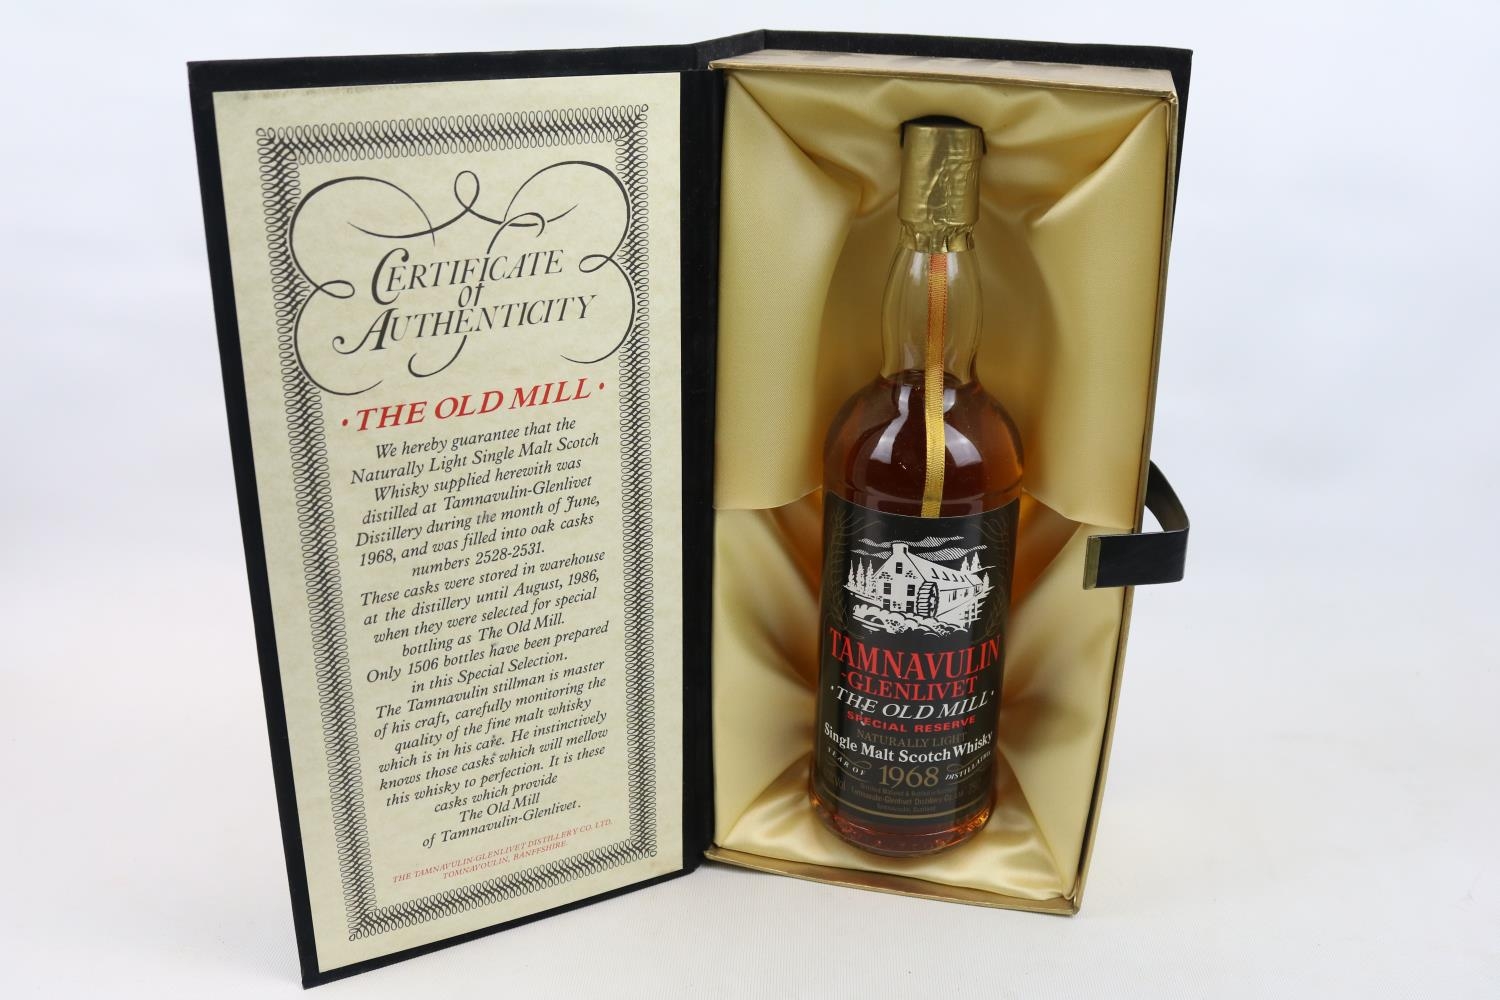 Boxed The Old Mill Tamnavulin-Glenlivet Single Malt Scotch Whisky 1968 750ml 40% Vol - Image 2 of 2